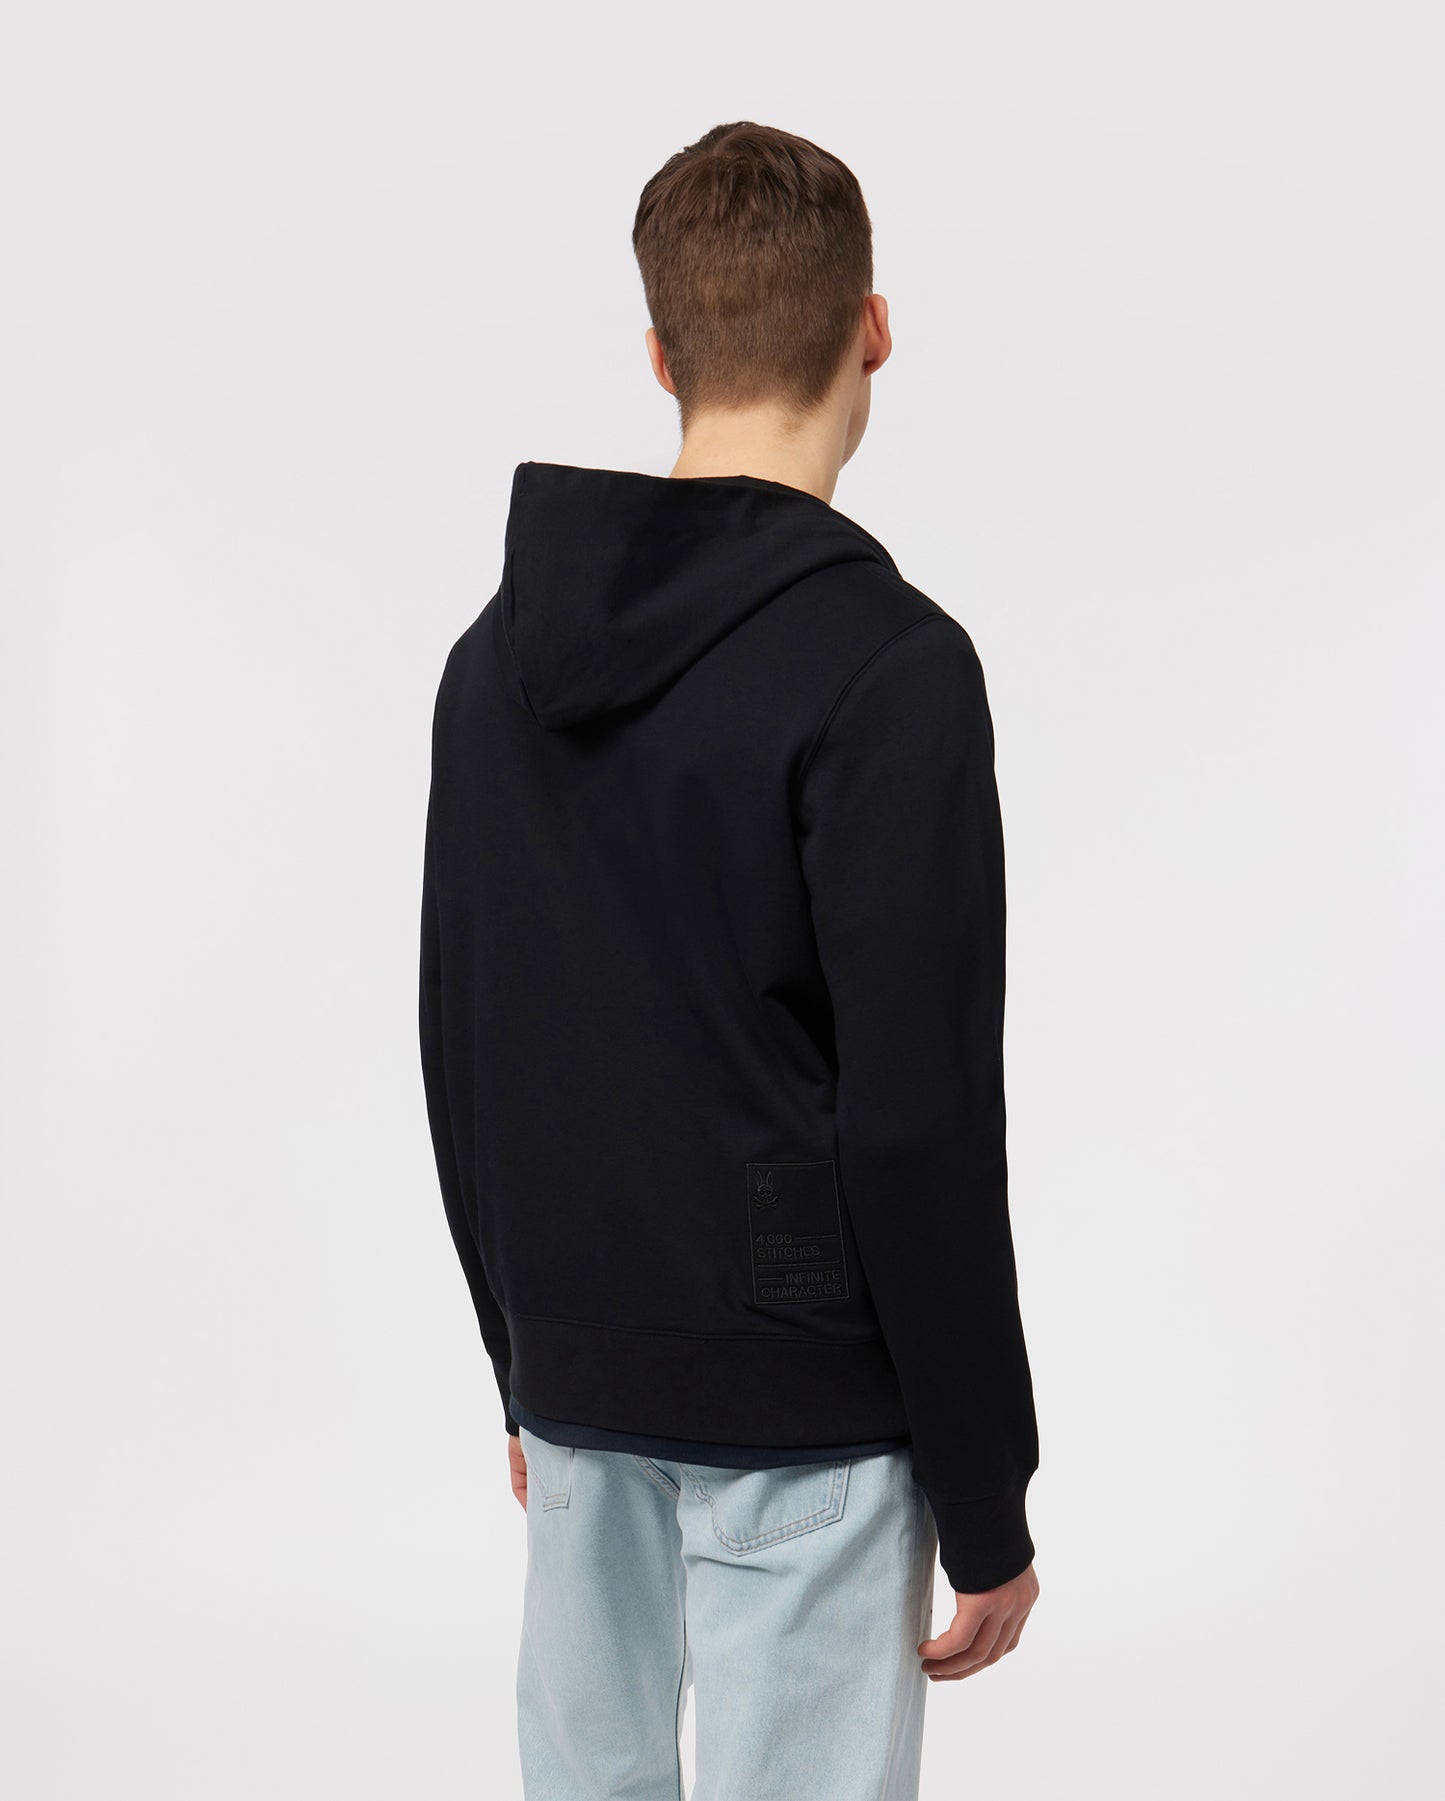 LV hoodie white – The Frenchie Shop